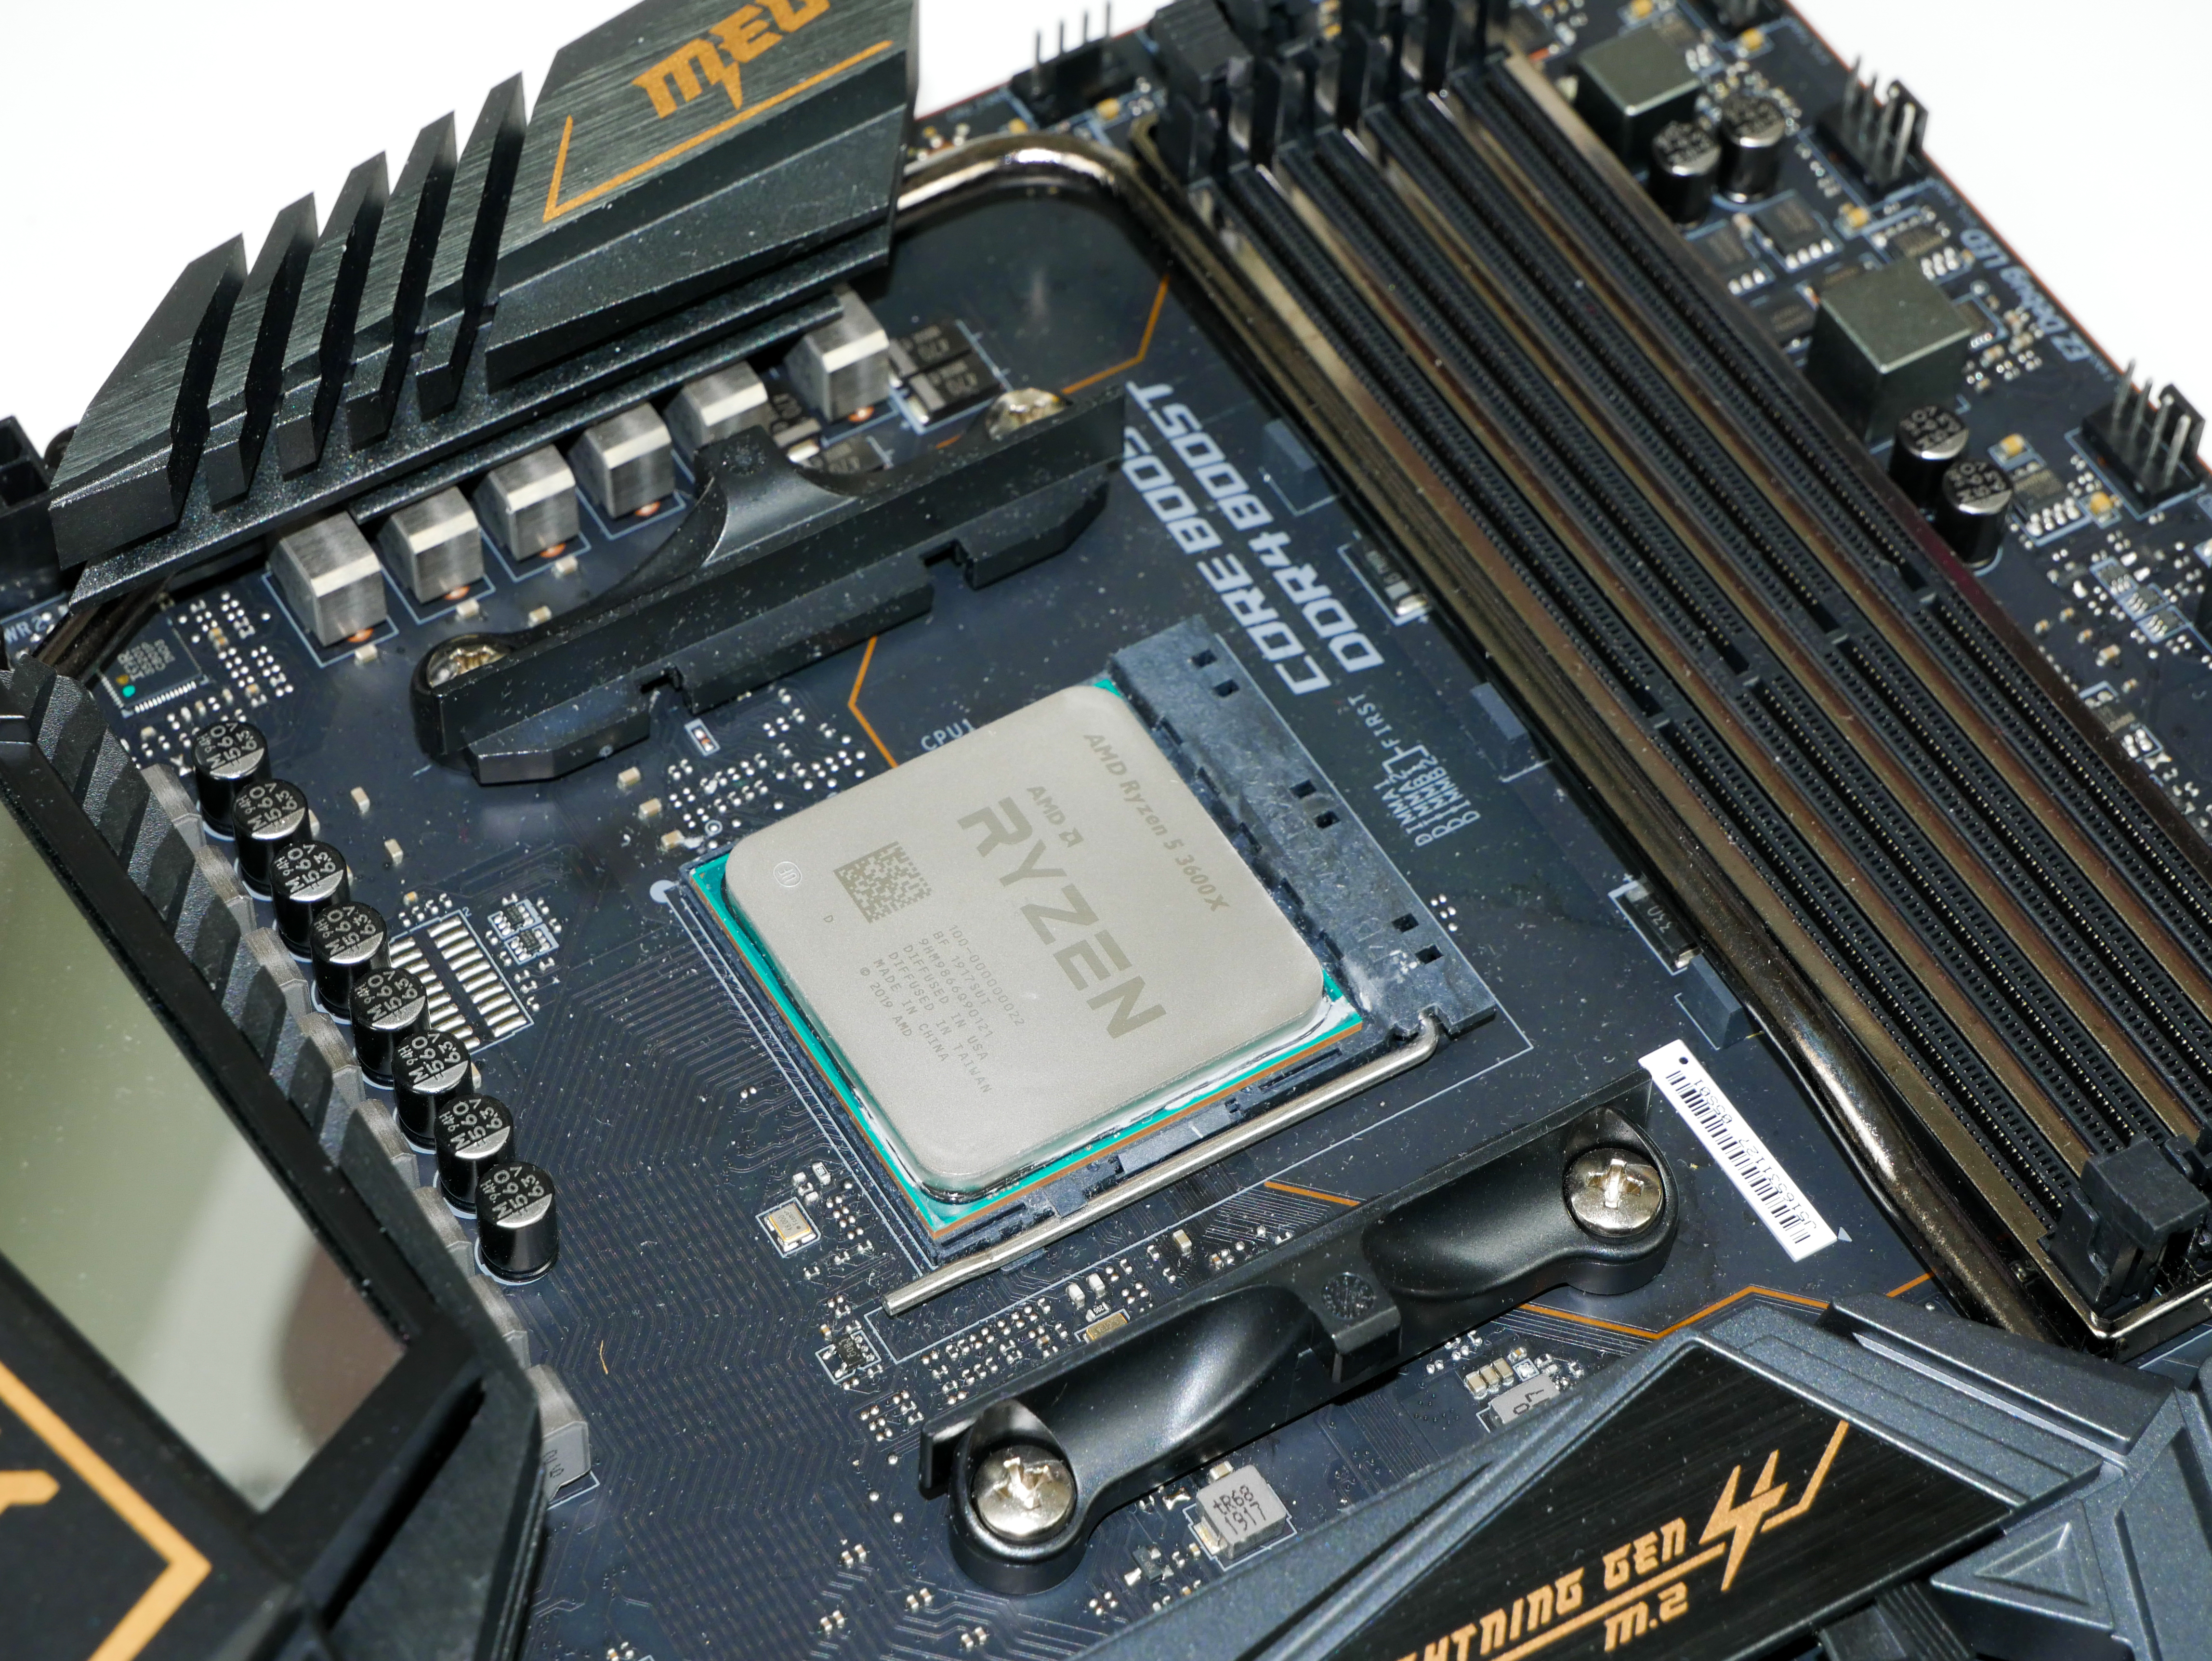 AMD Ryzen 5 3600X (6C12T) CPU Review 